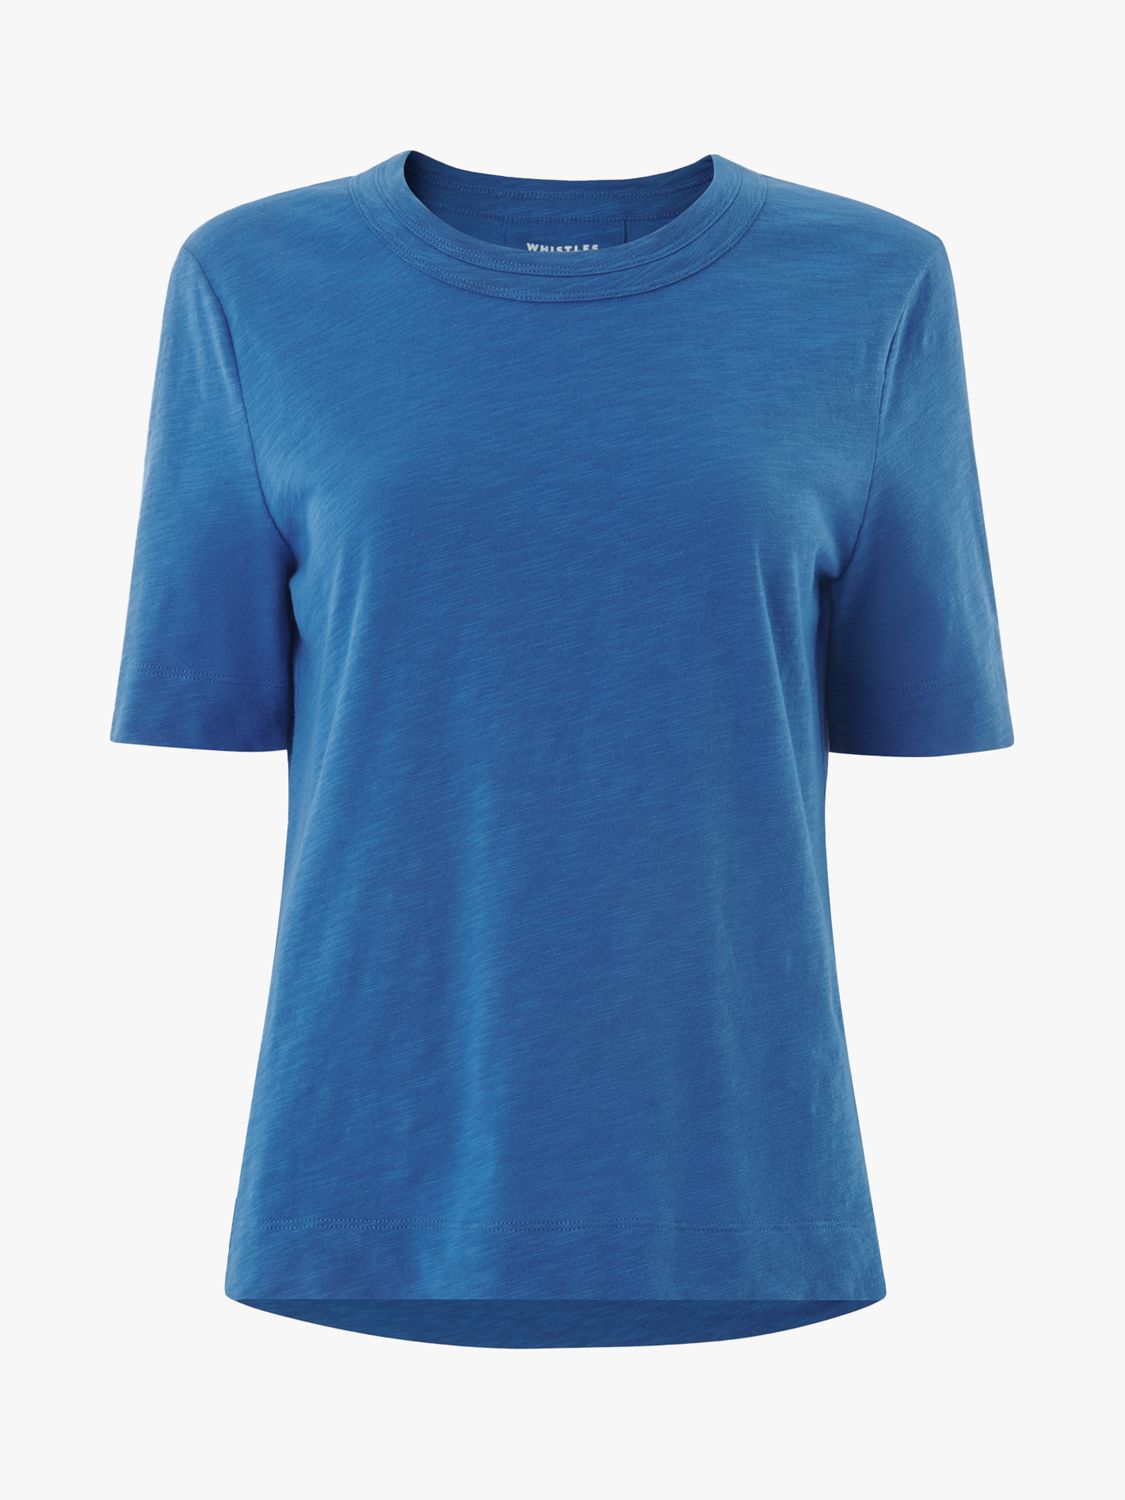 Whistles Rosa Double Trim T-Shirt, Blue at John Lewis & Partners